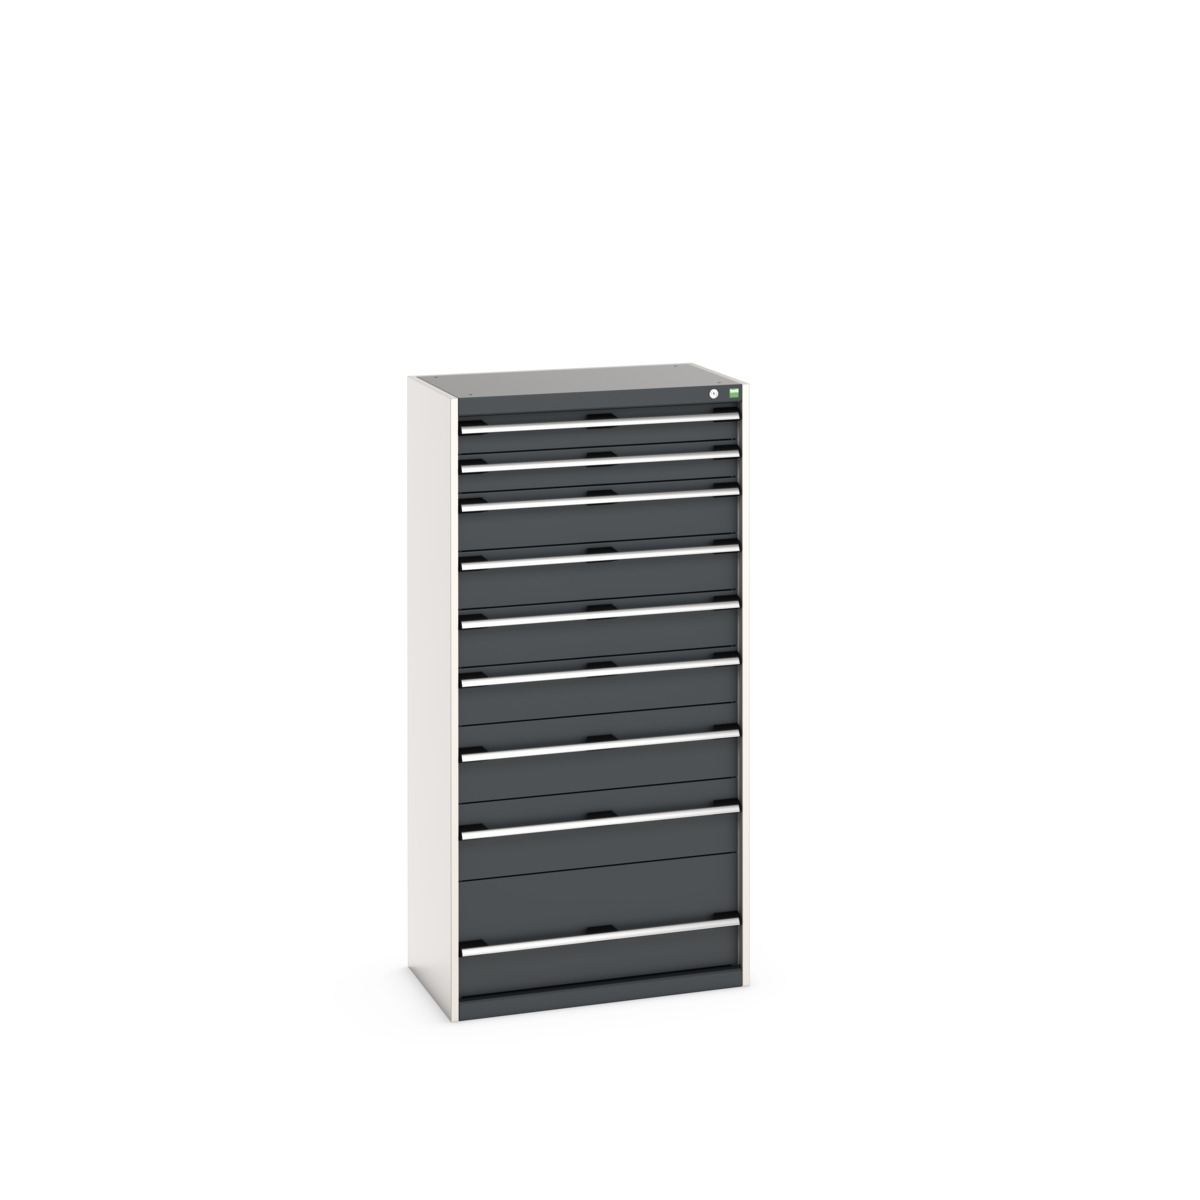 40012110. - cubio drawer cabinet